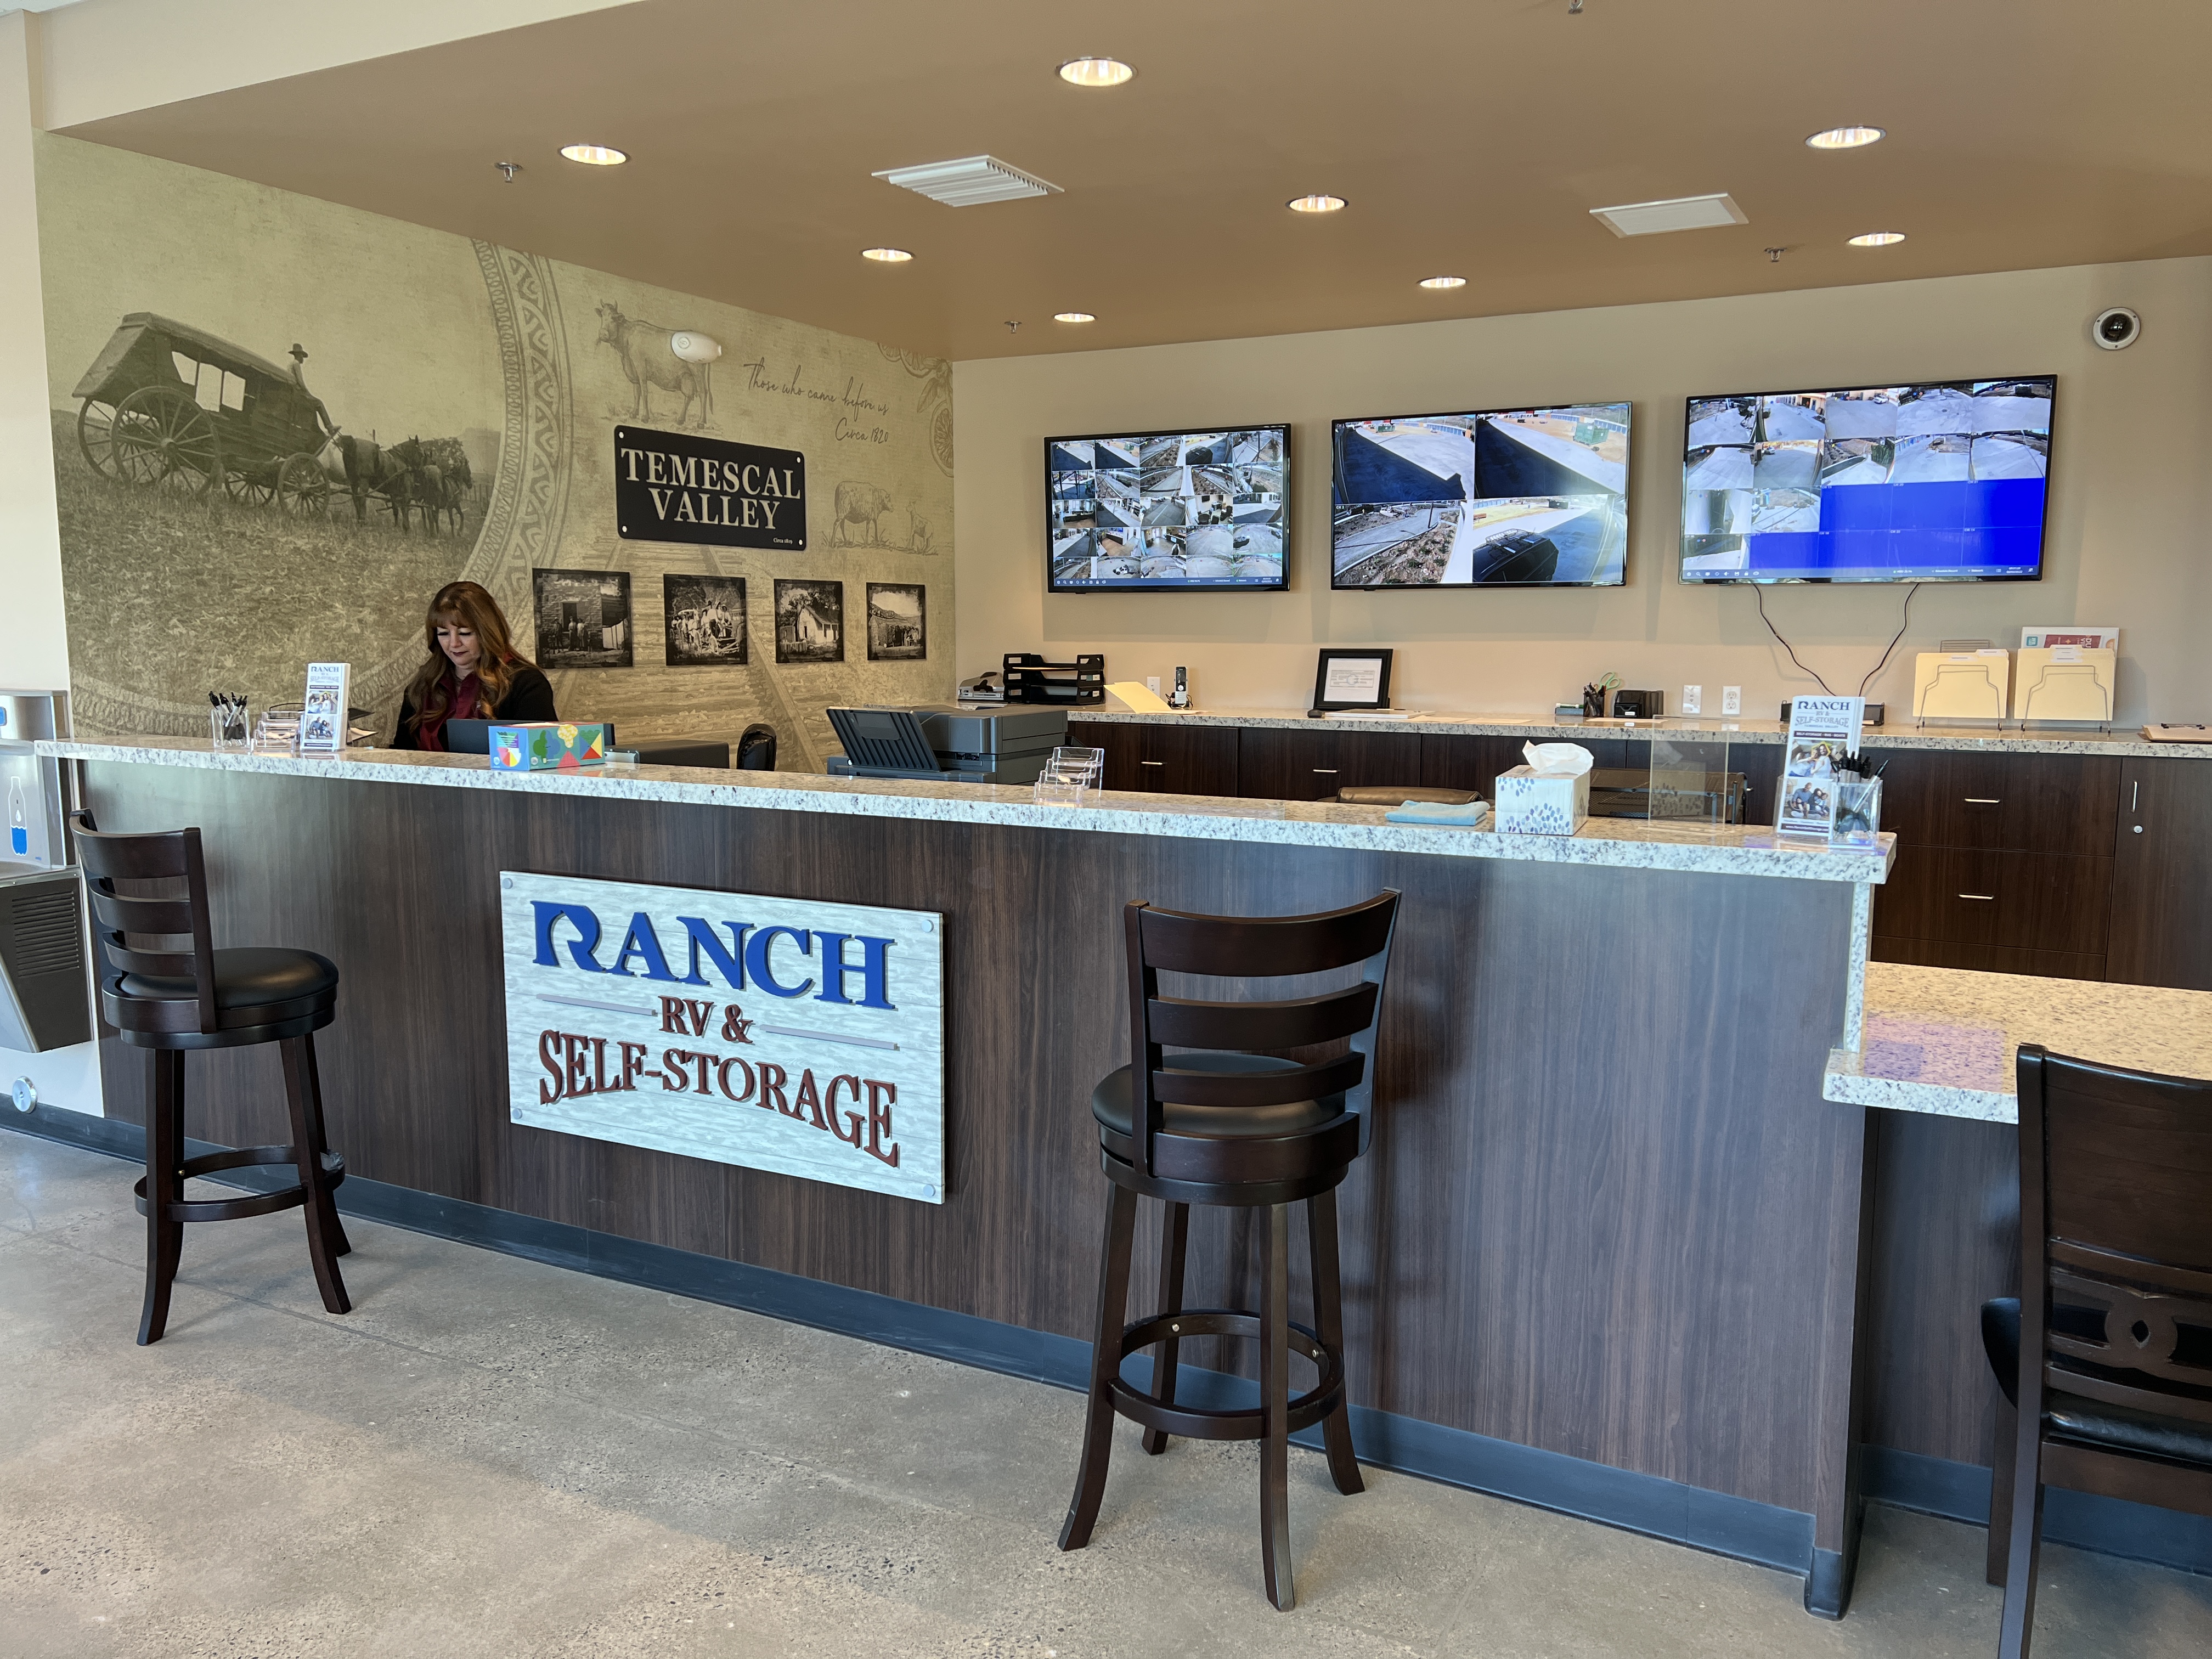 Ranch RV & Self-Storage Office